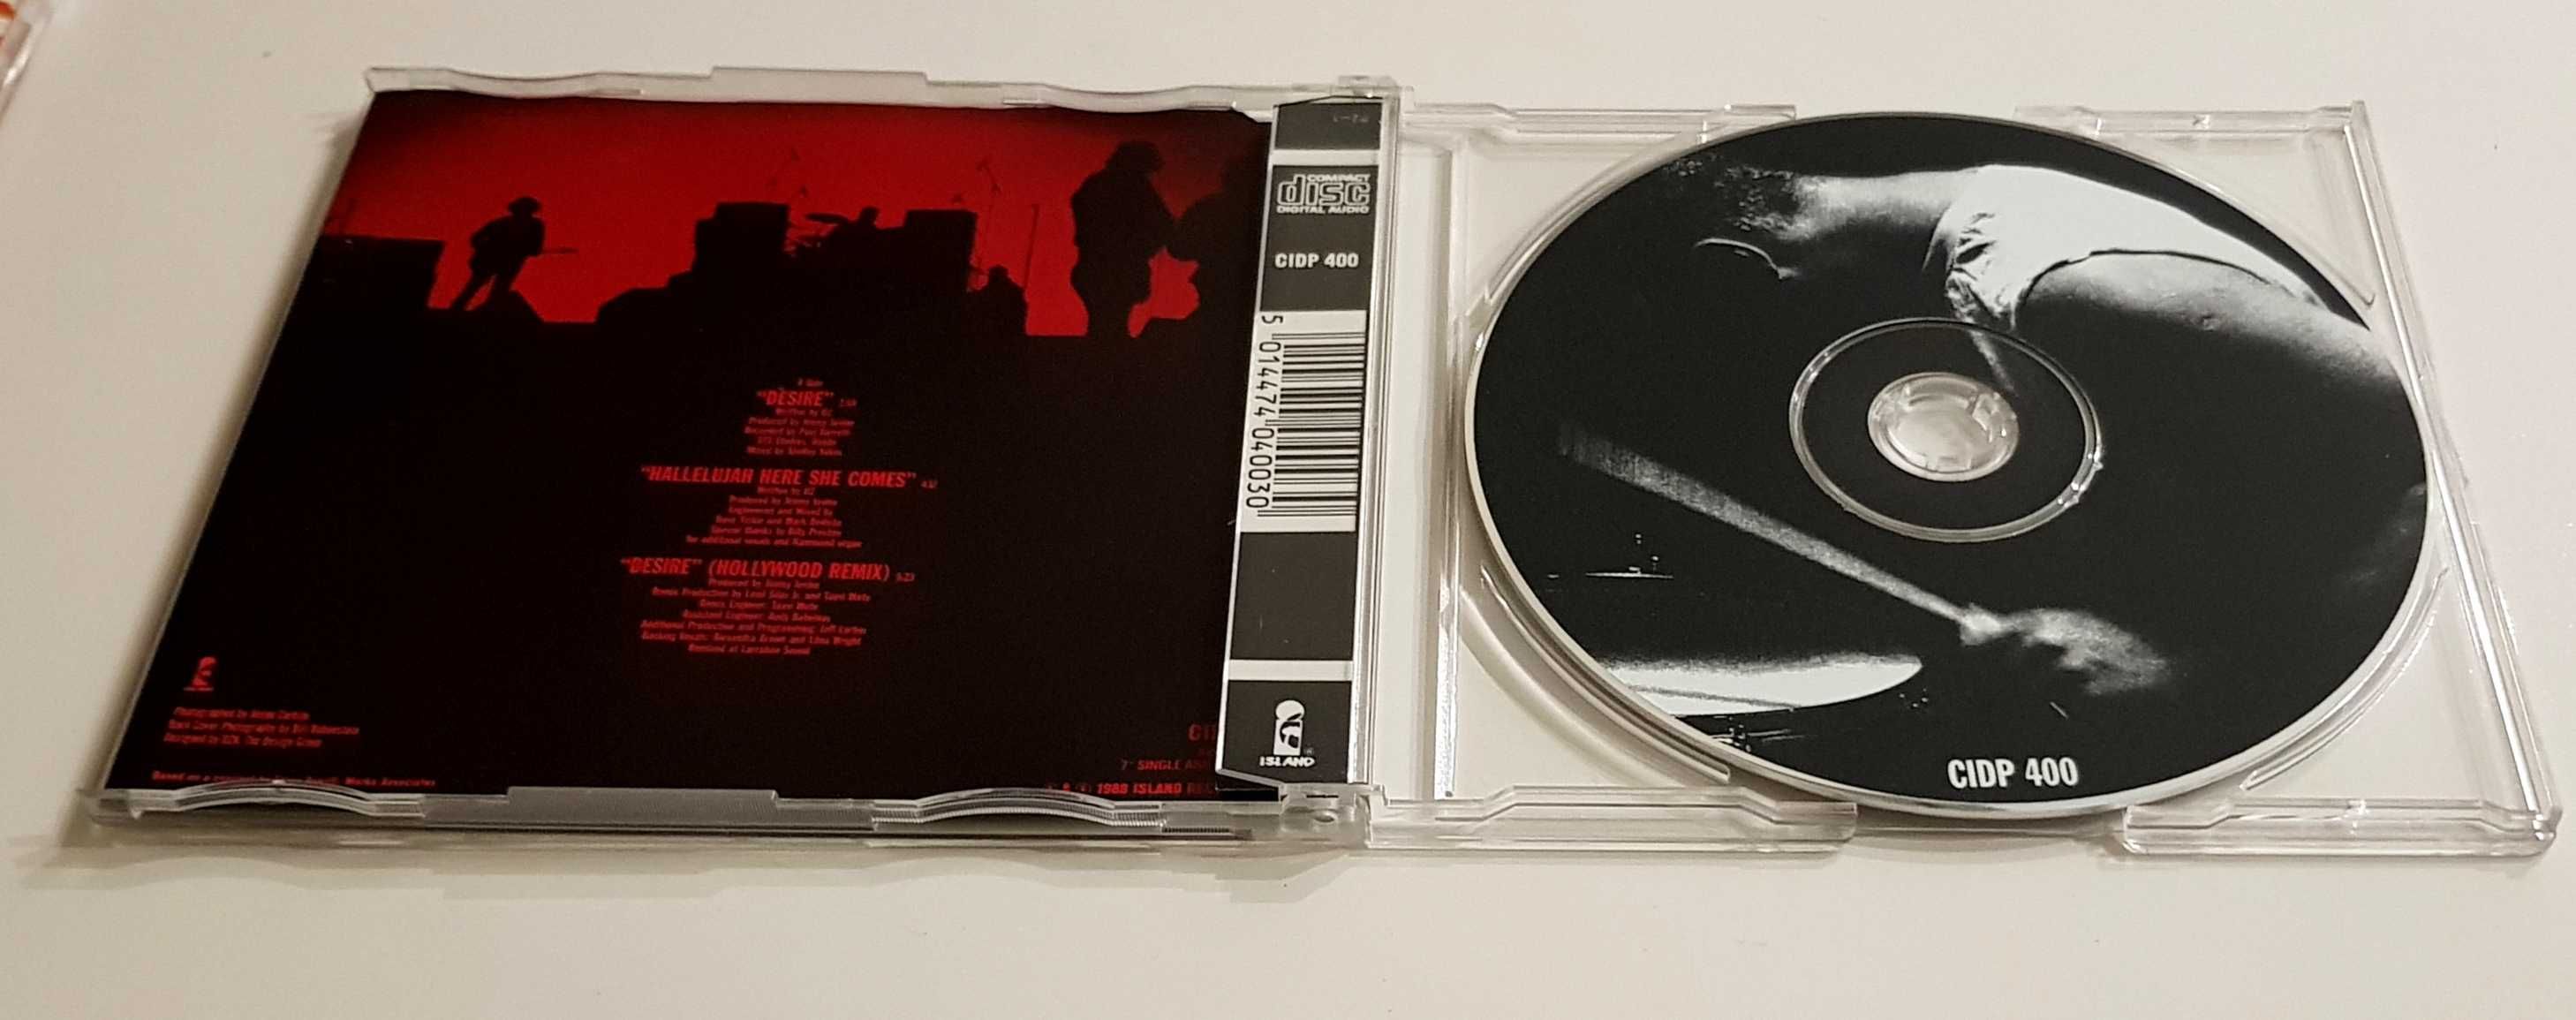 U2 - Desire CD single UK edition